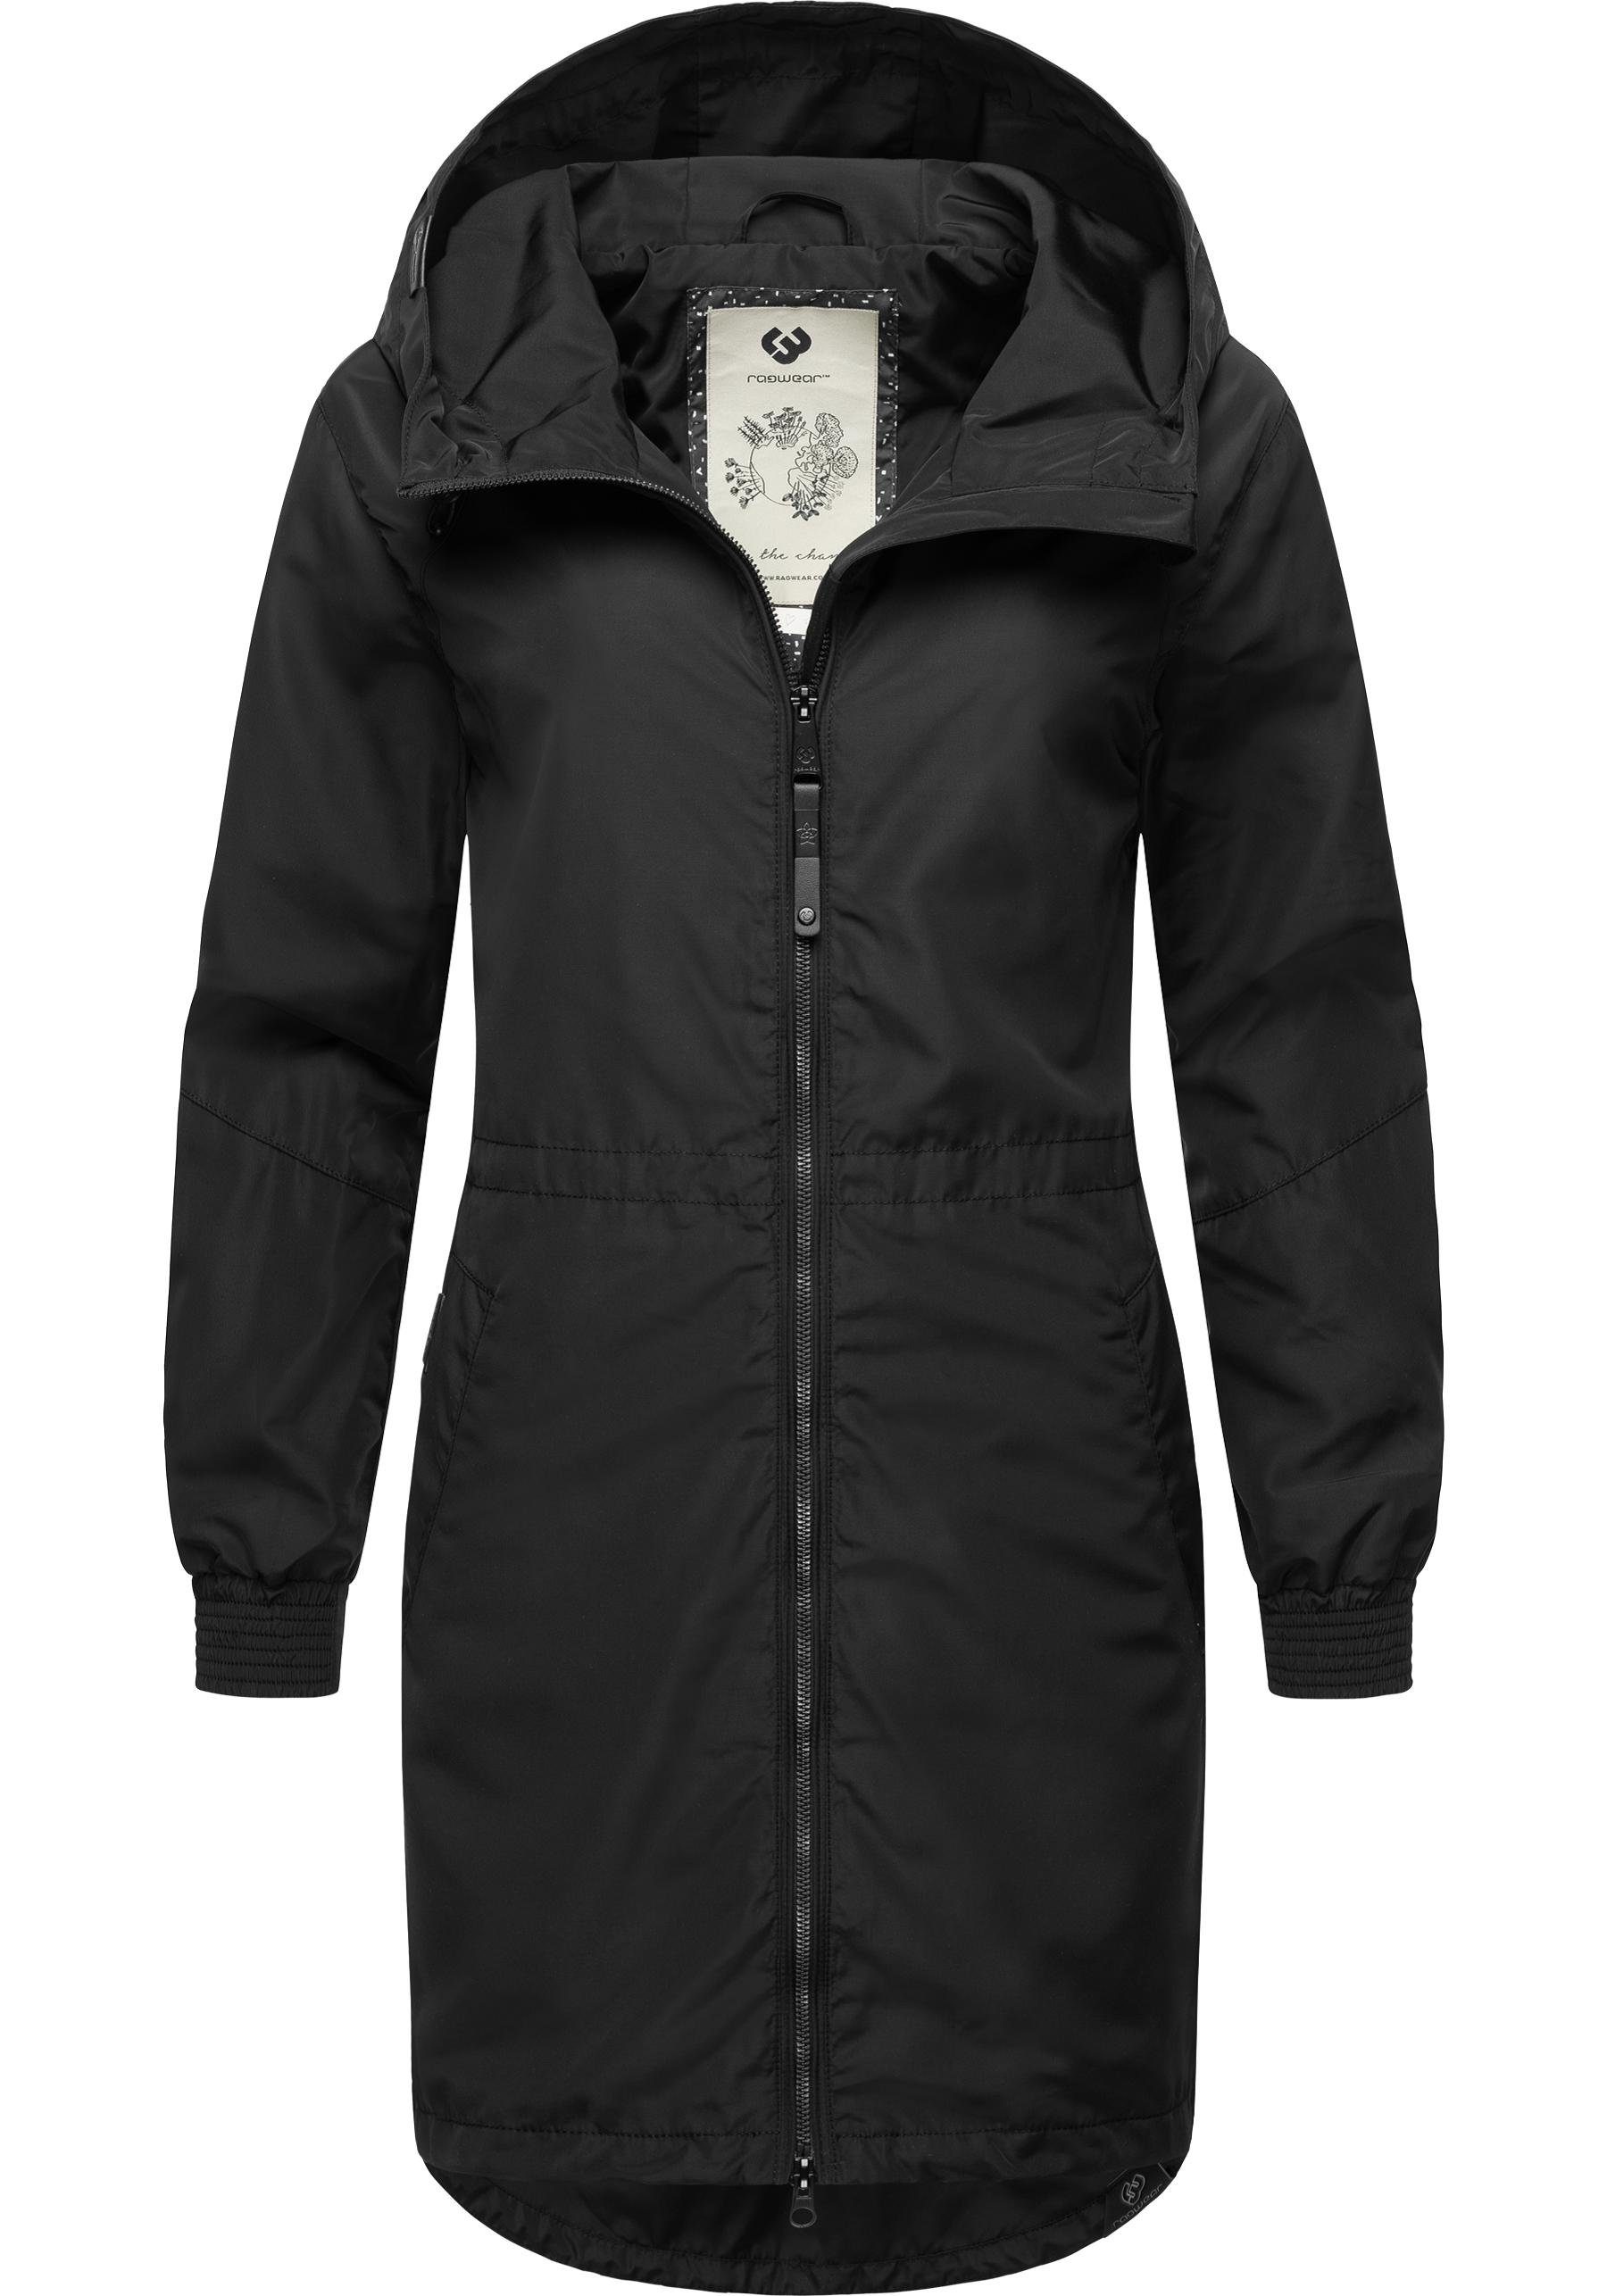 Ragwear Outdoorjacke Bronja stylischer unifarbener Übergangsmantel schwarz | Übergangsjacken